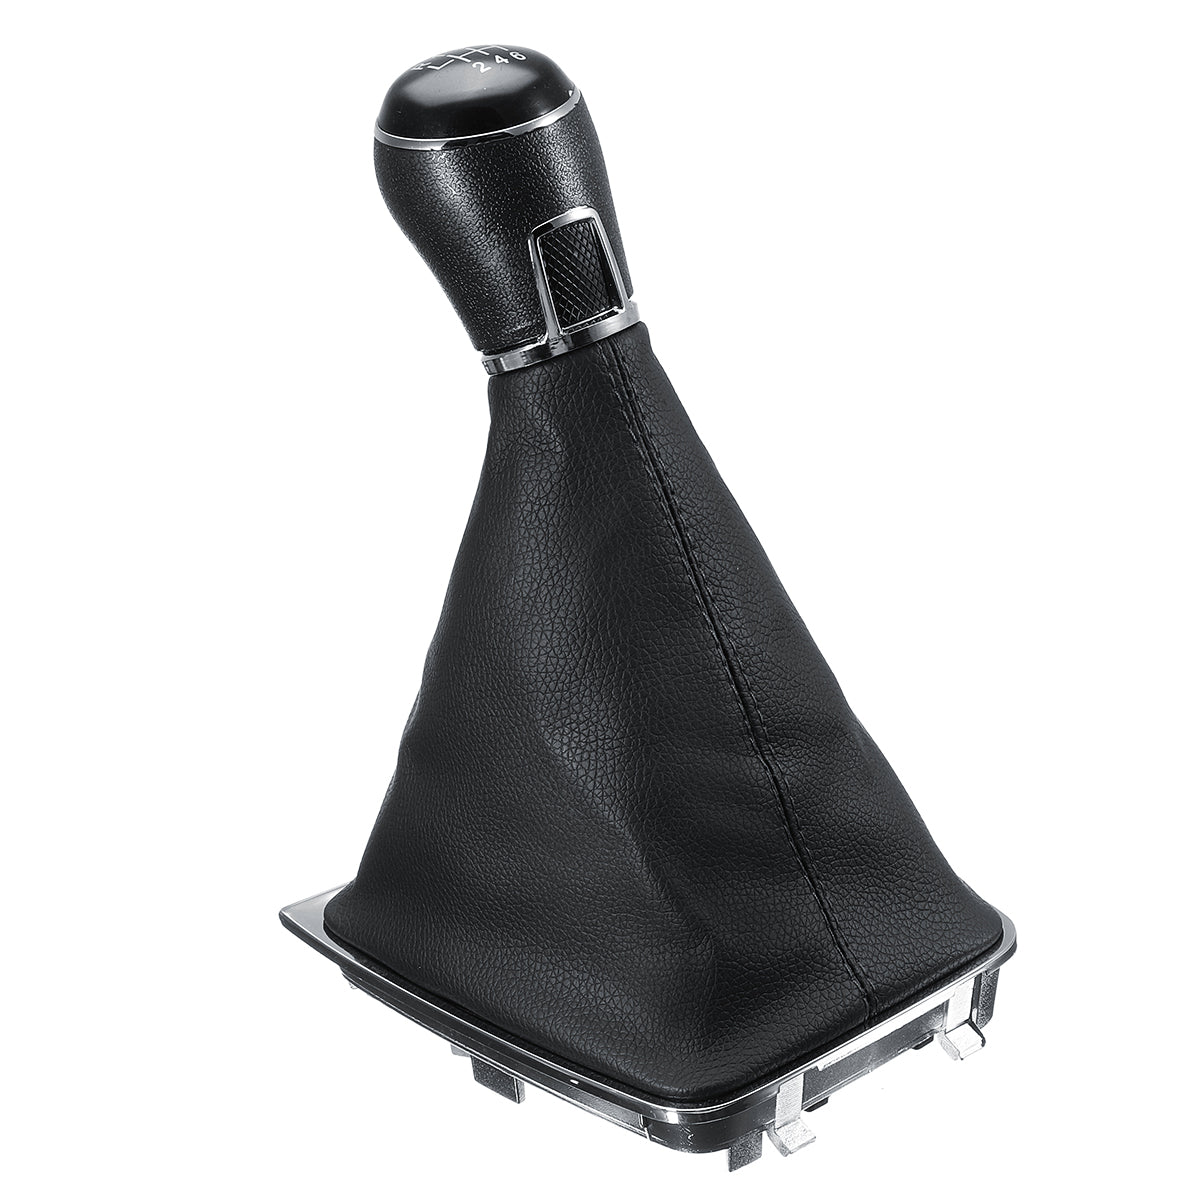 Dark Slate Gray 5 Speed Manual Gear Shift Knob Gaitor Boost Fit For VW Golf 7 MK7 2013-2016